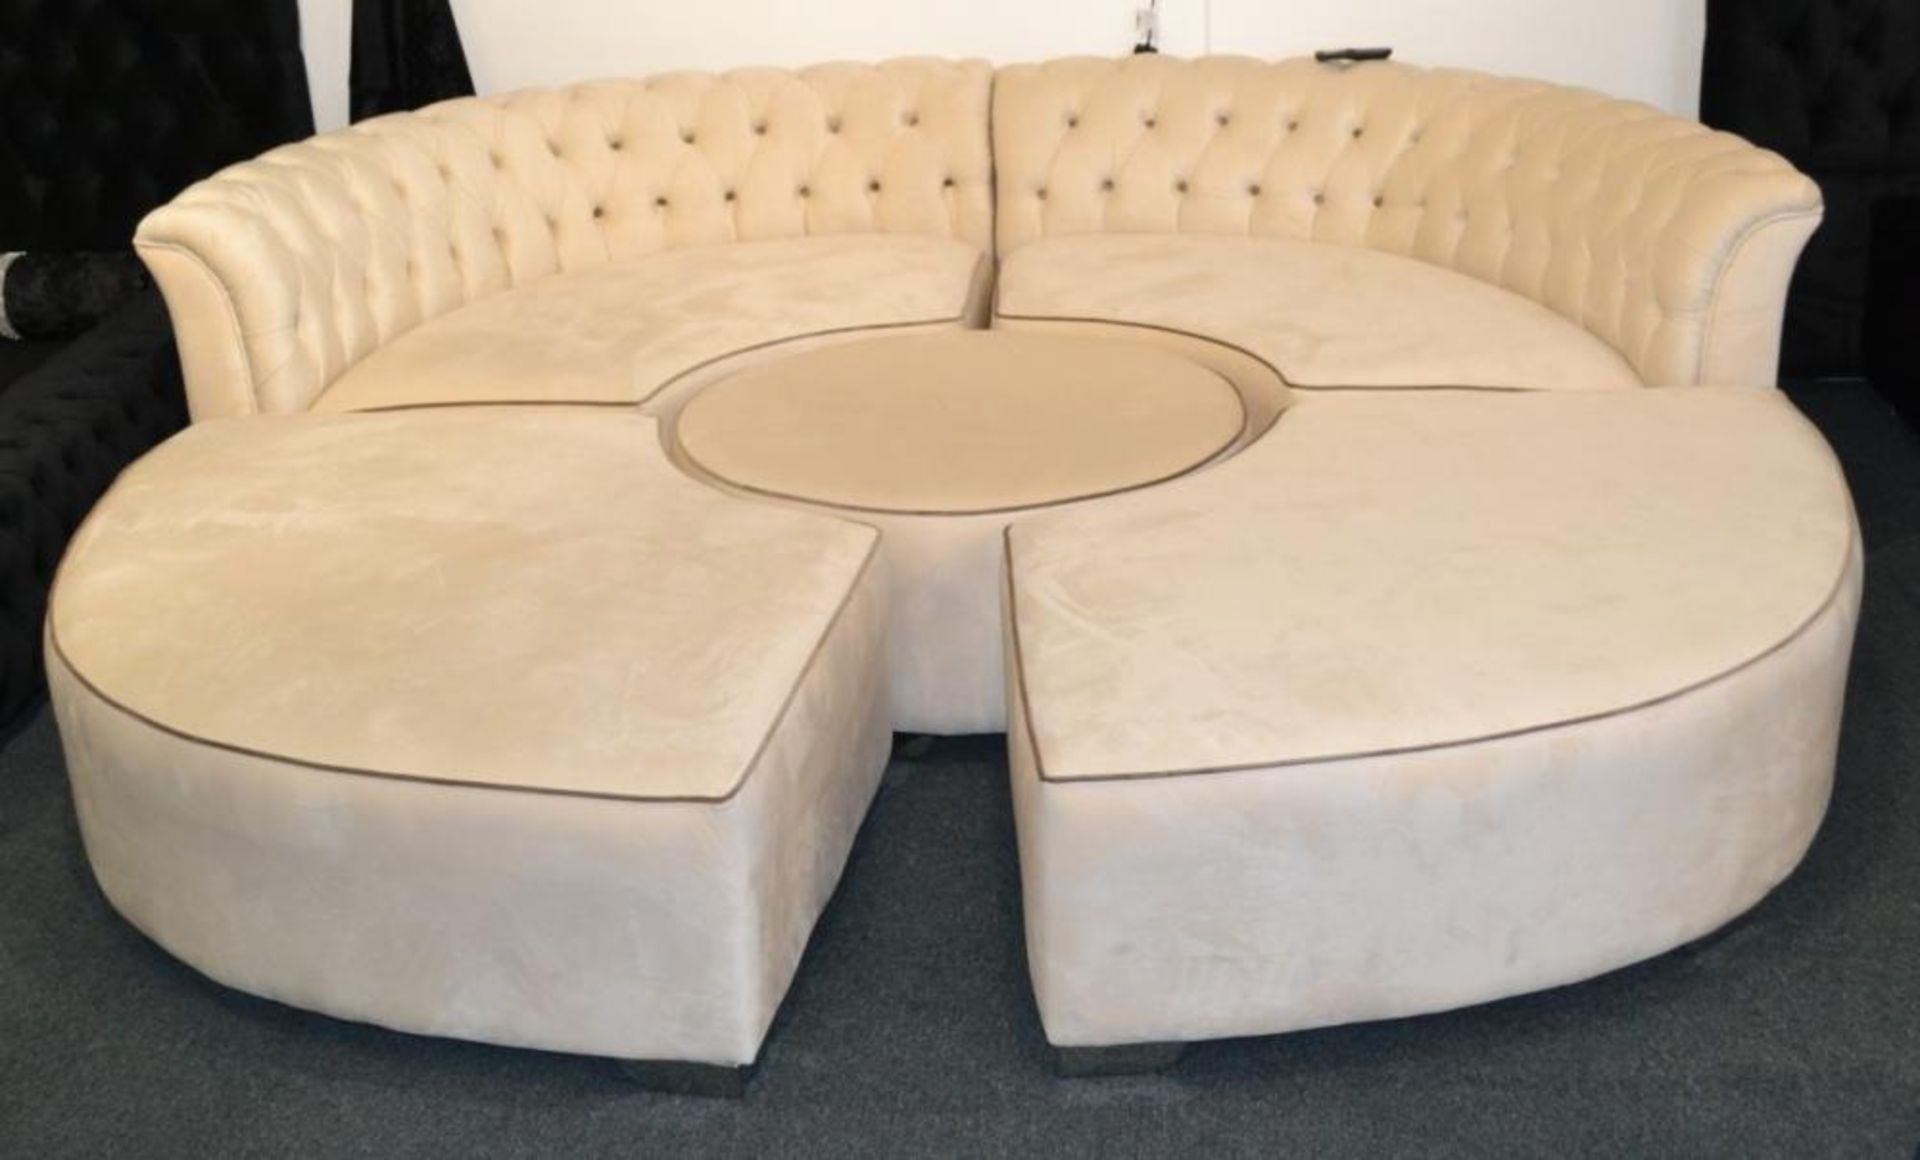 1 x Luxurious Bespoke Cream Velour 5 Piece Sofa Set. A truly beautiful bespoke piece that will give